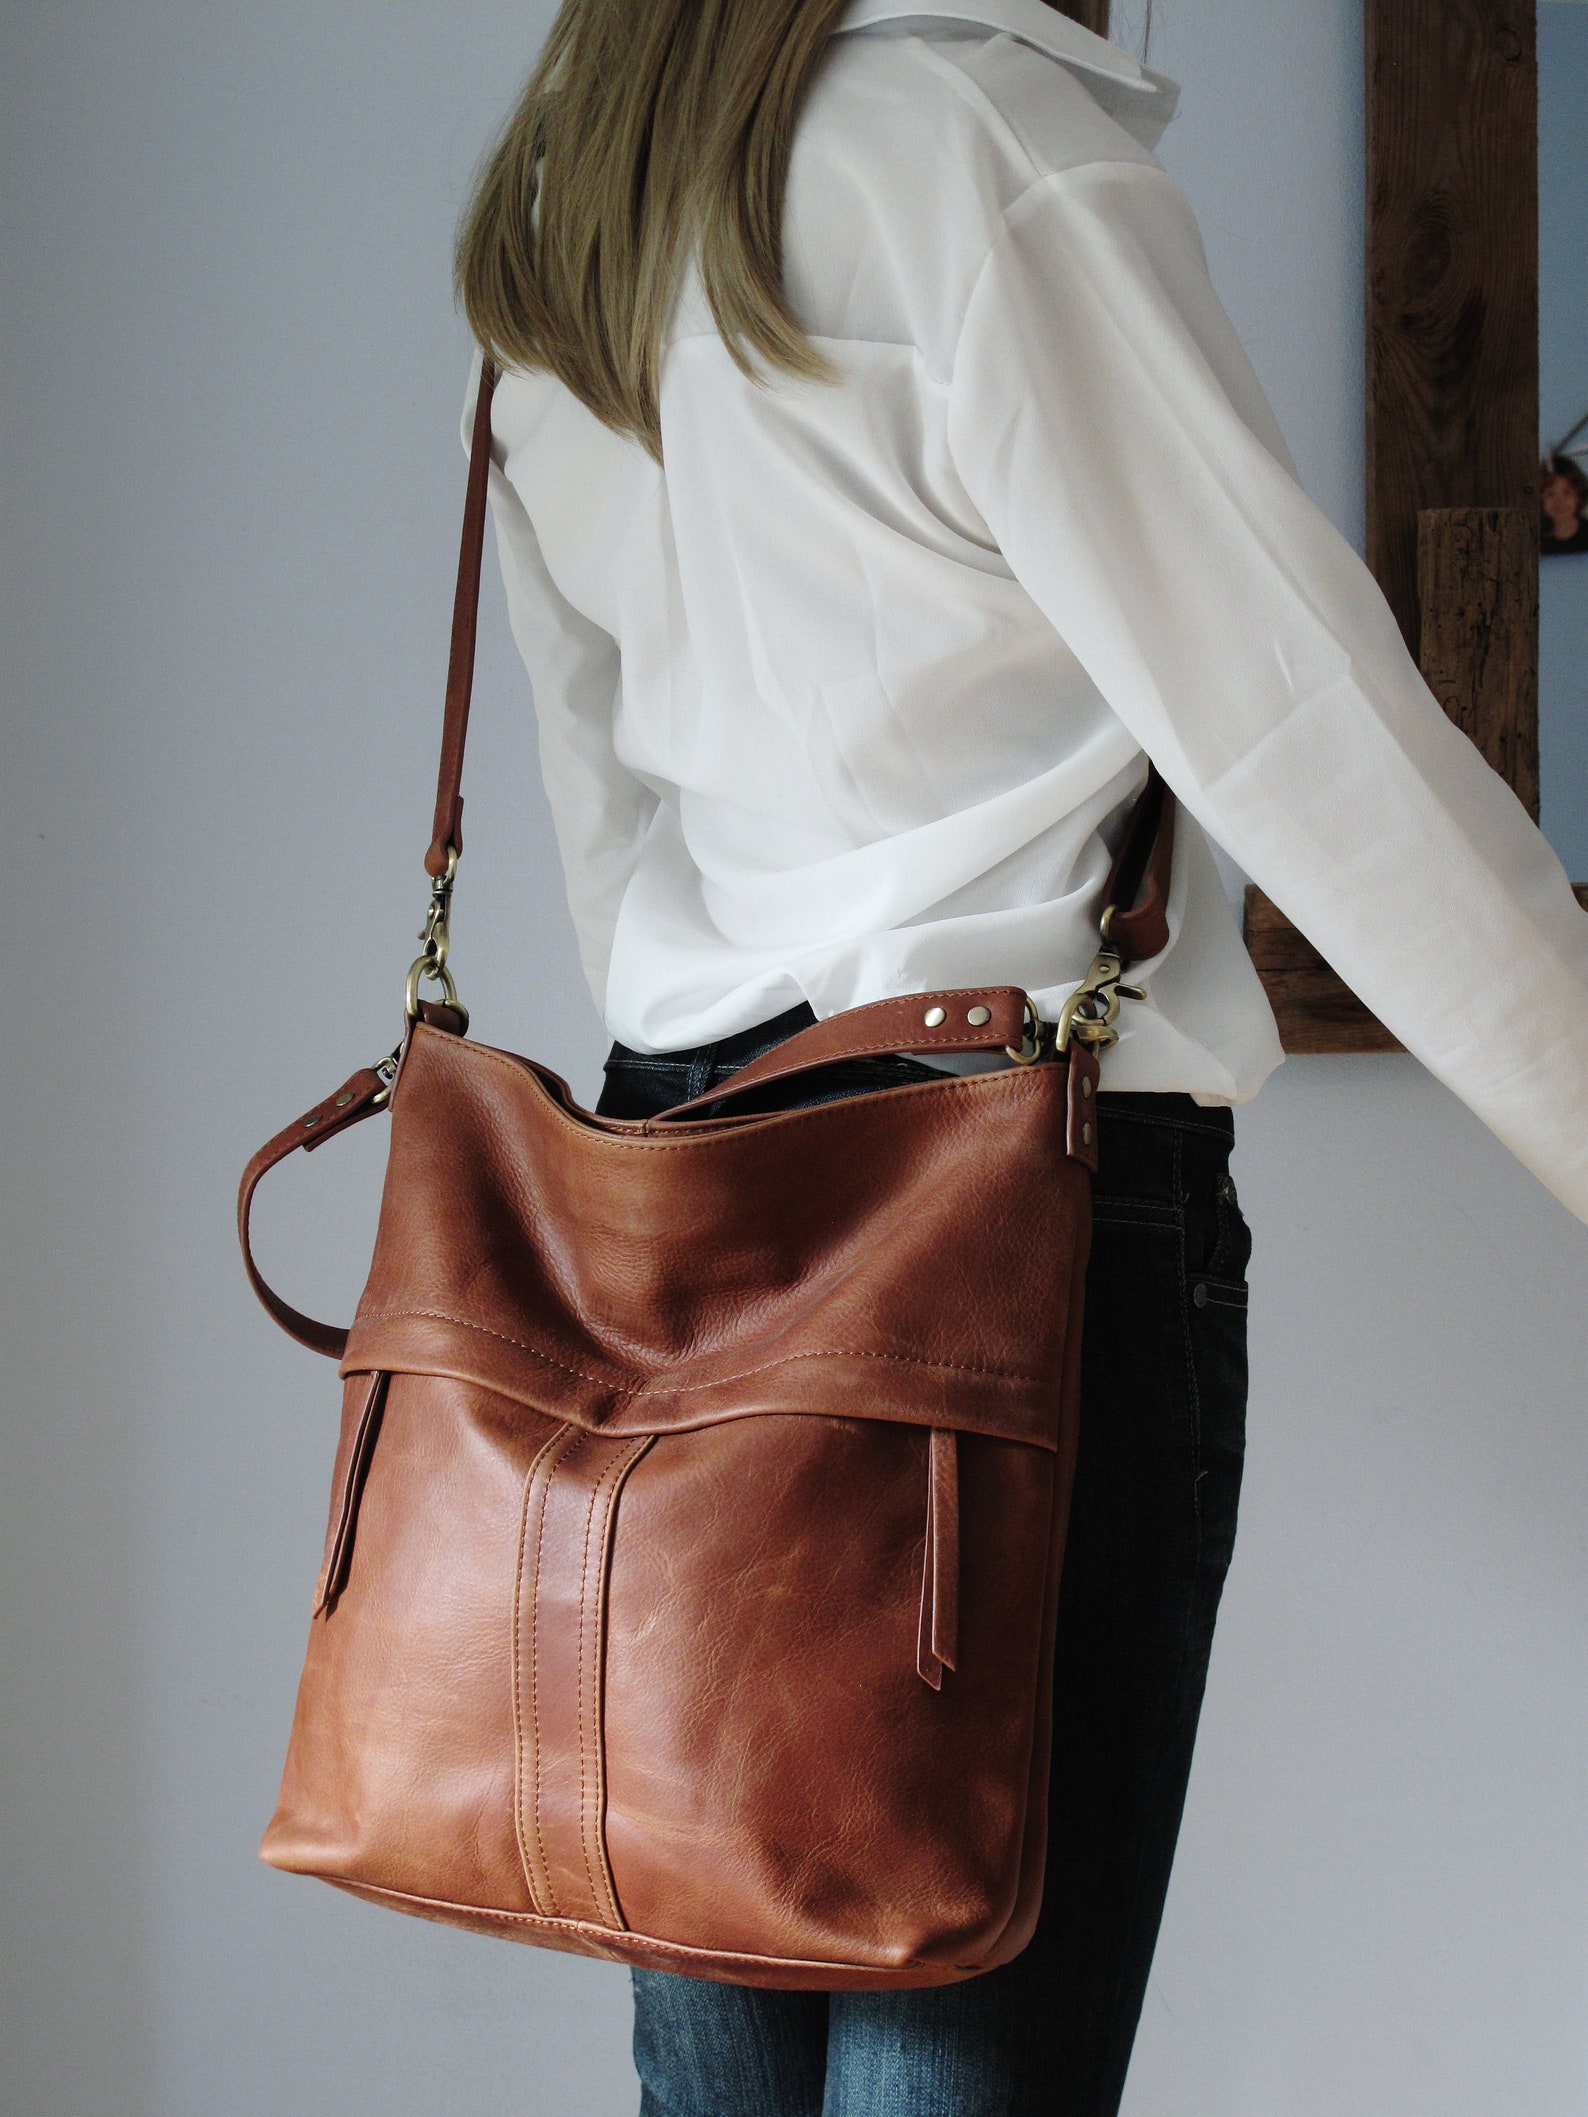 Tan Leather Shoulder Bag Crossbody Purse Tan Handbag - Etsy